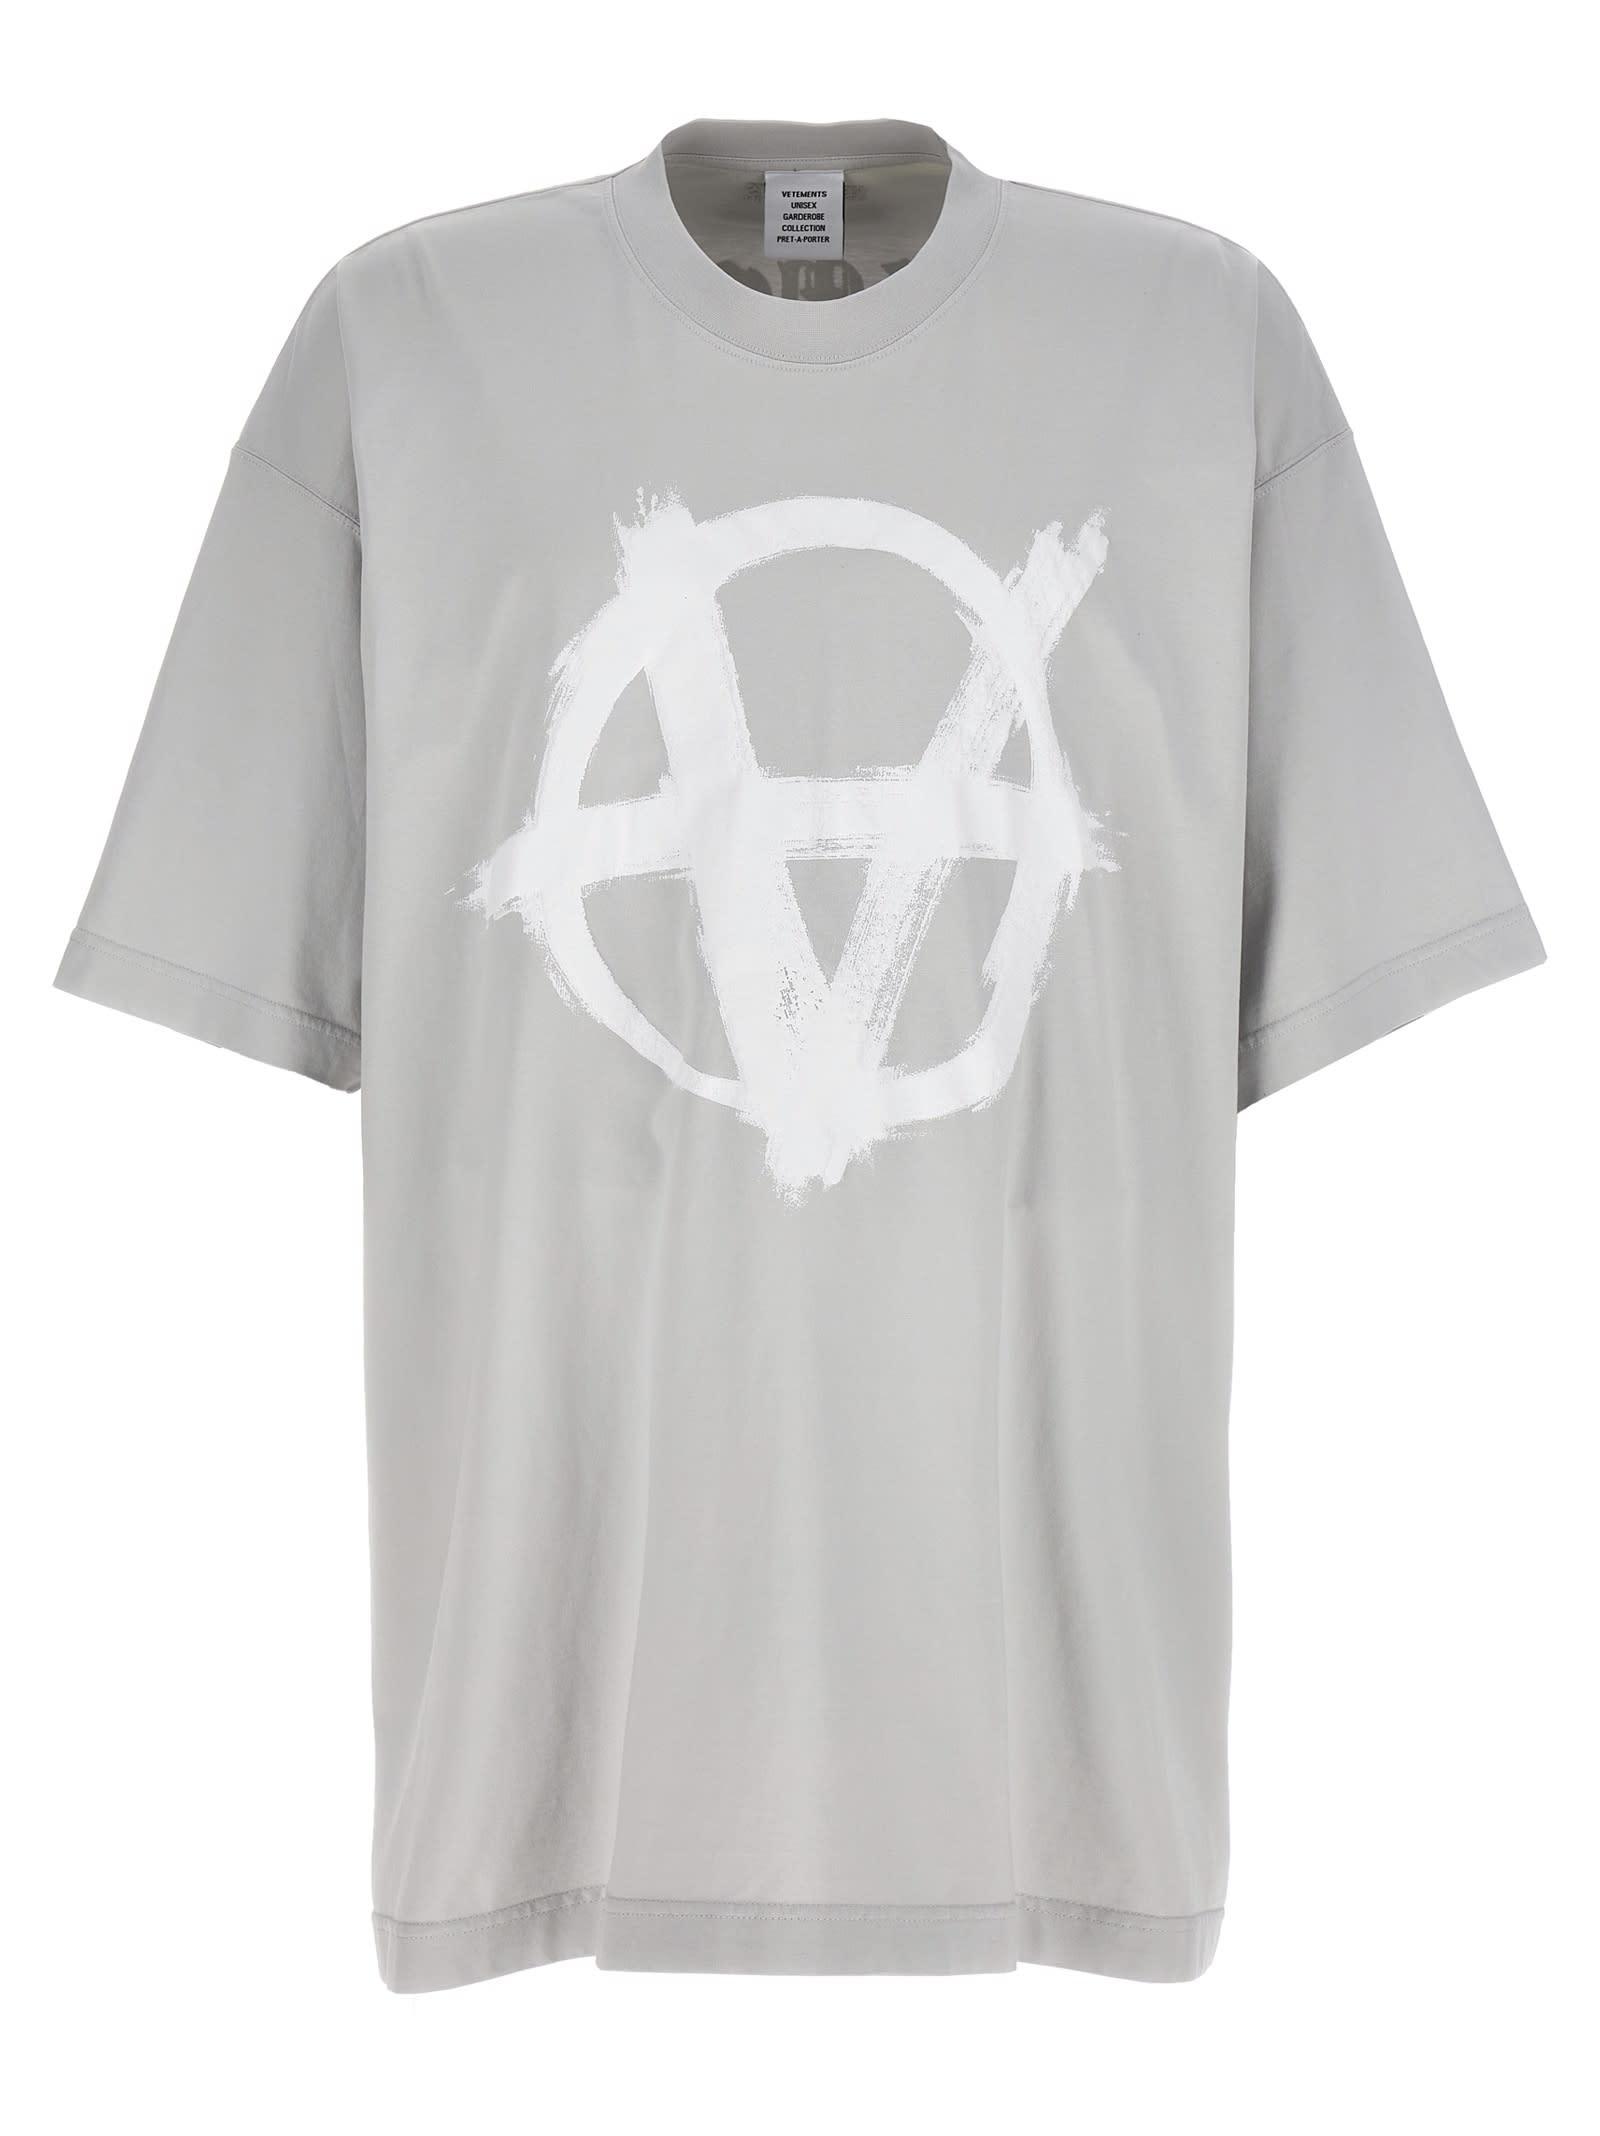 VETEMENTS Reverse Anarchy T-shirt - Men